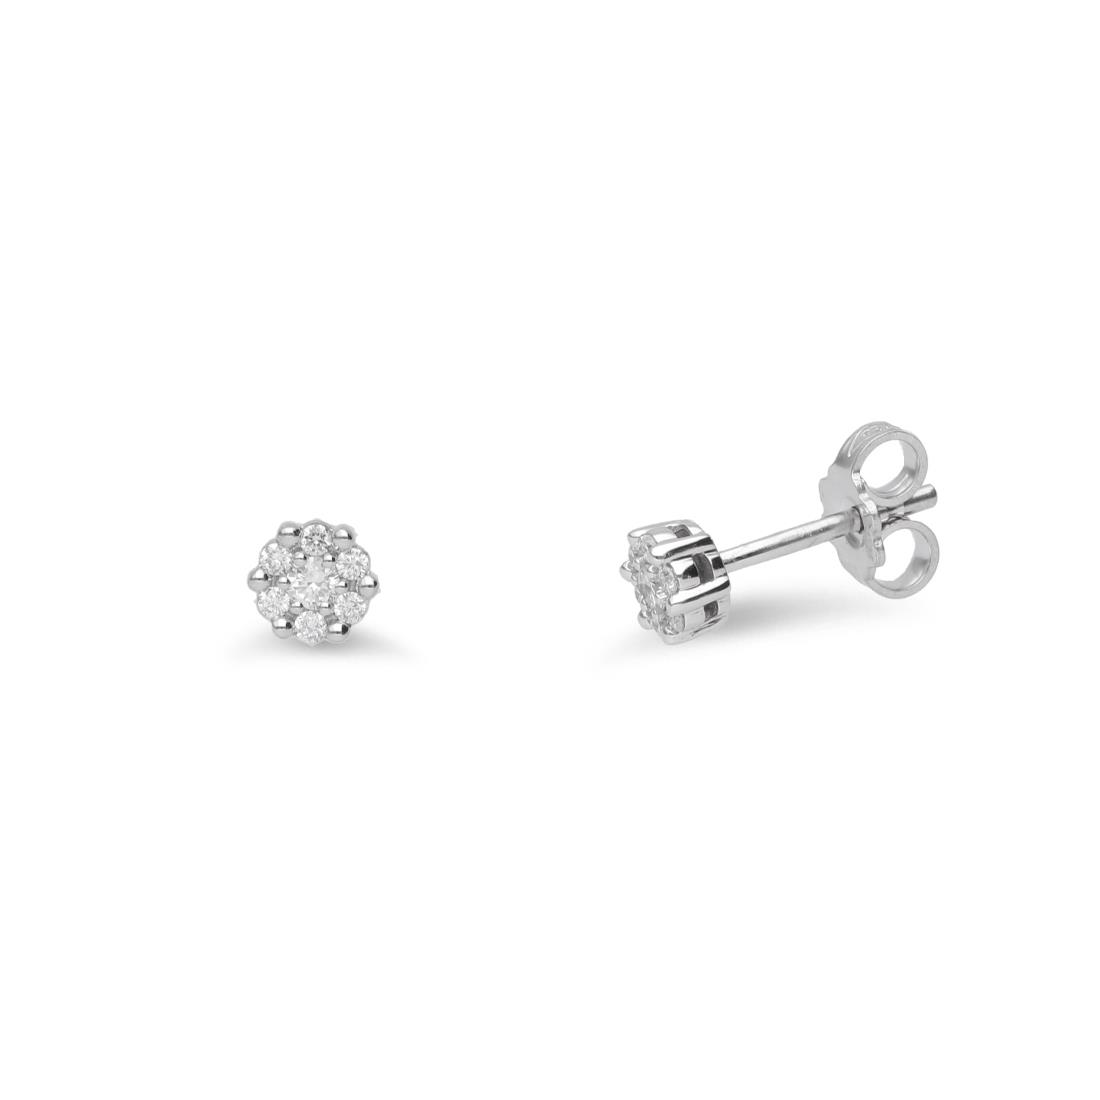  White gold earrings with diamonds  ct 0.15 - ALFIERI & ST. JOHN